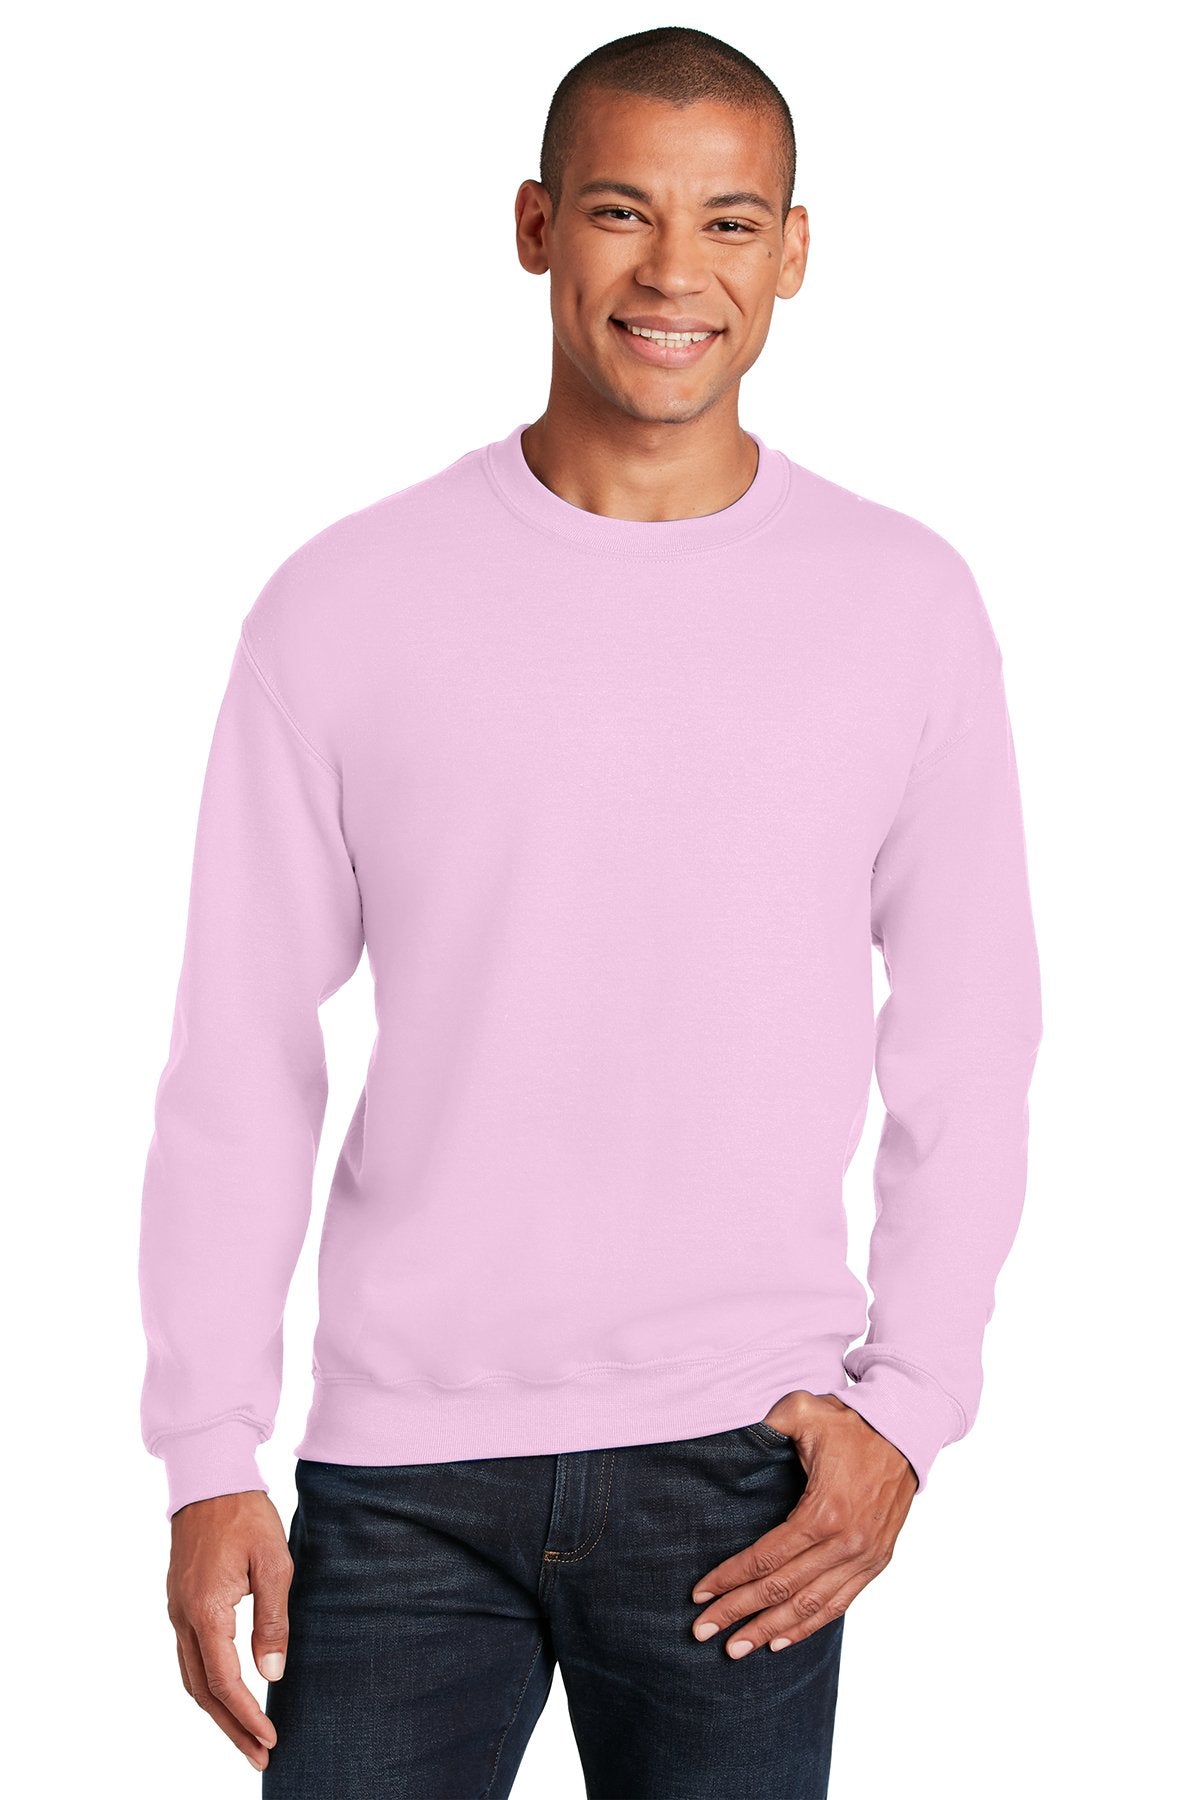 Gildan Light Pink 18000 custom logo sweatshirts embroidered